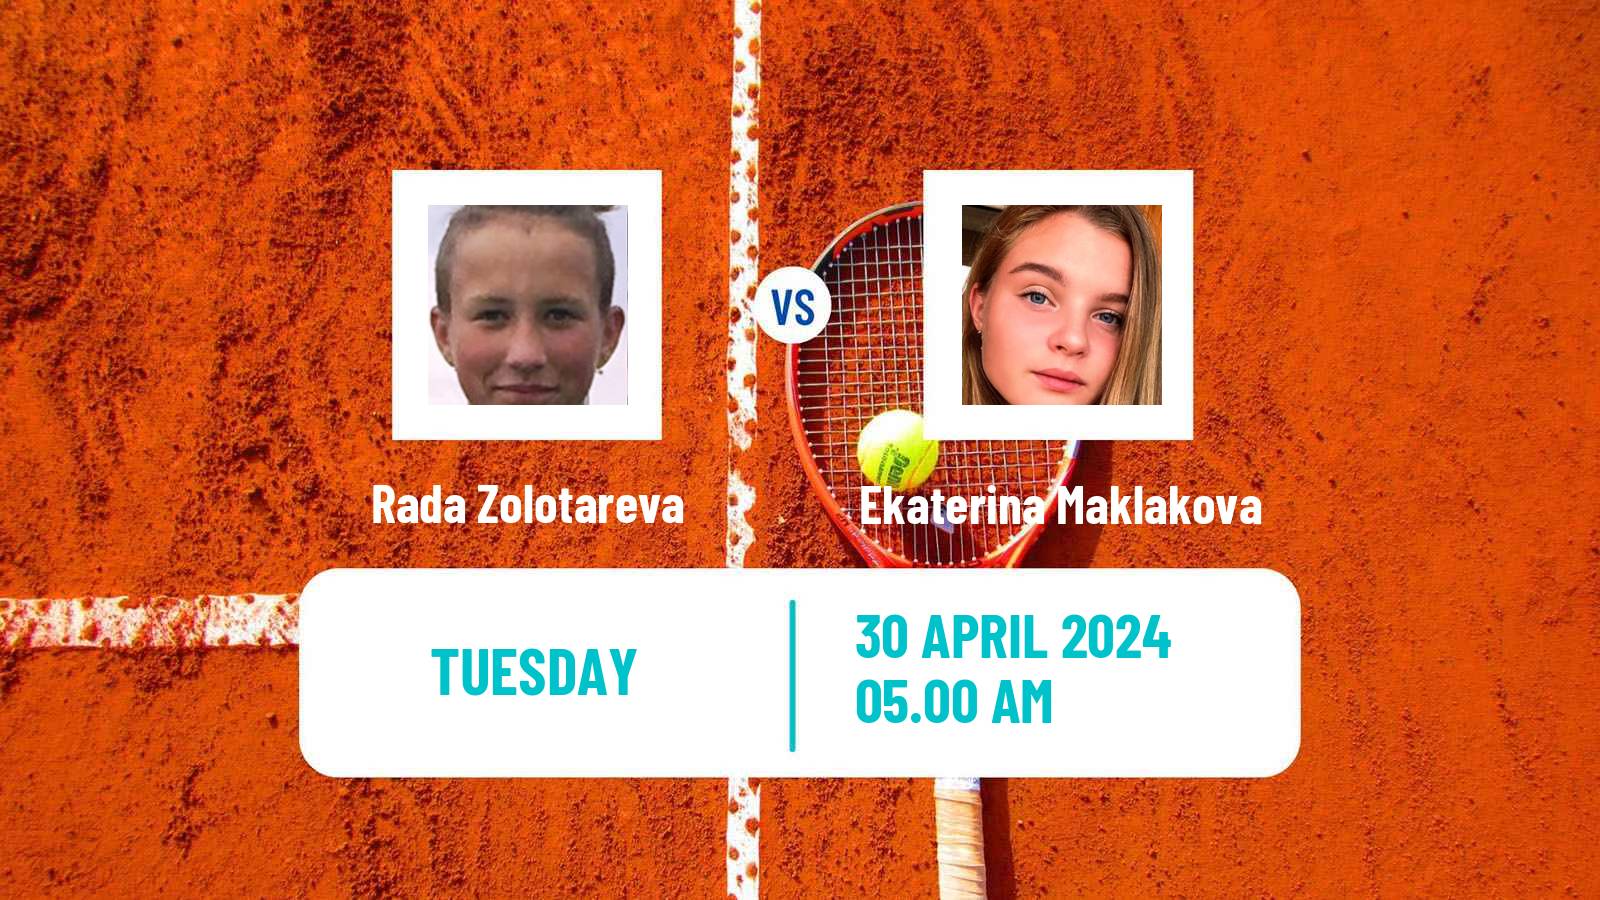 Tennis ITF W50 Lopota 2 Women Rada Zolotareva - Ekaterina Maklakova